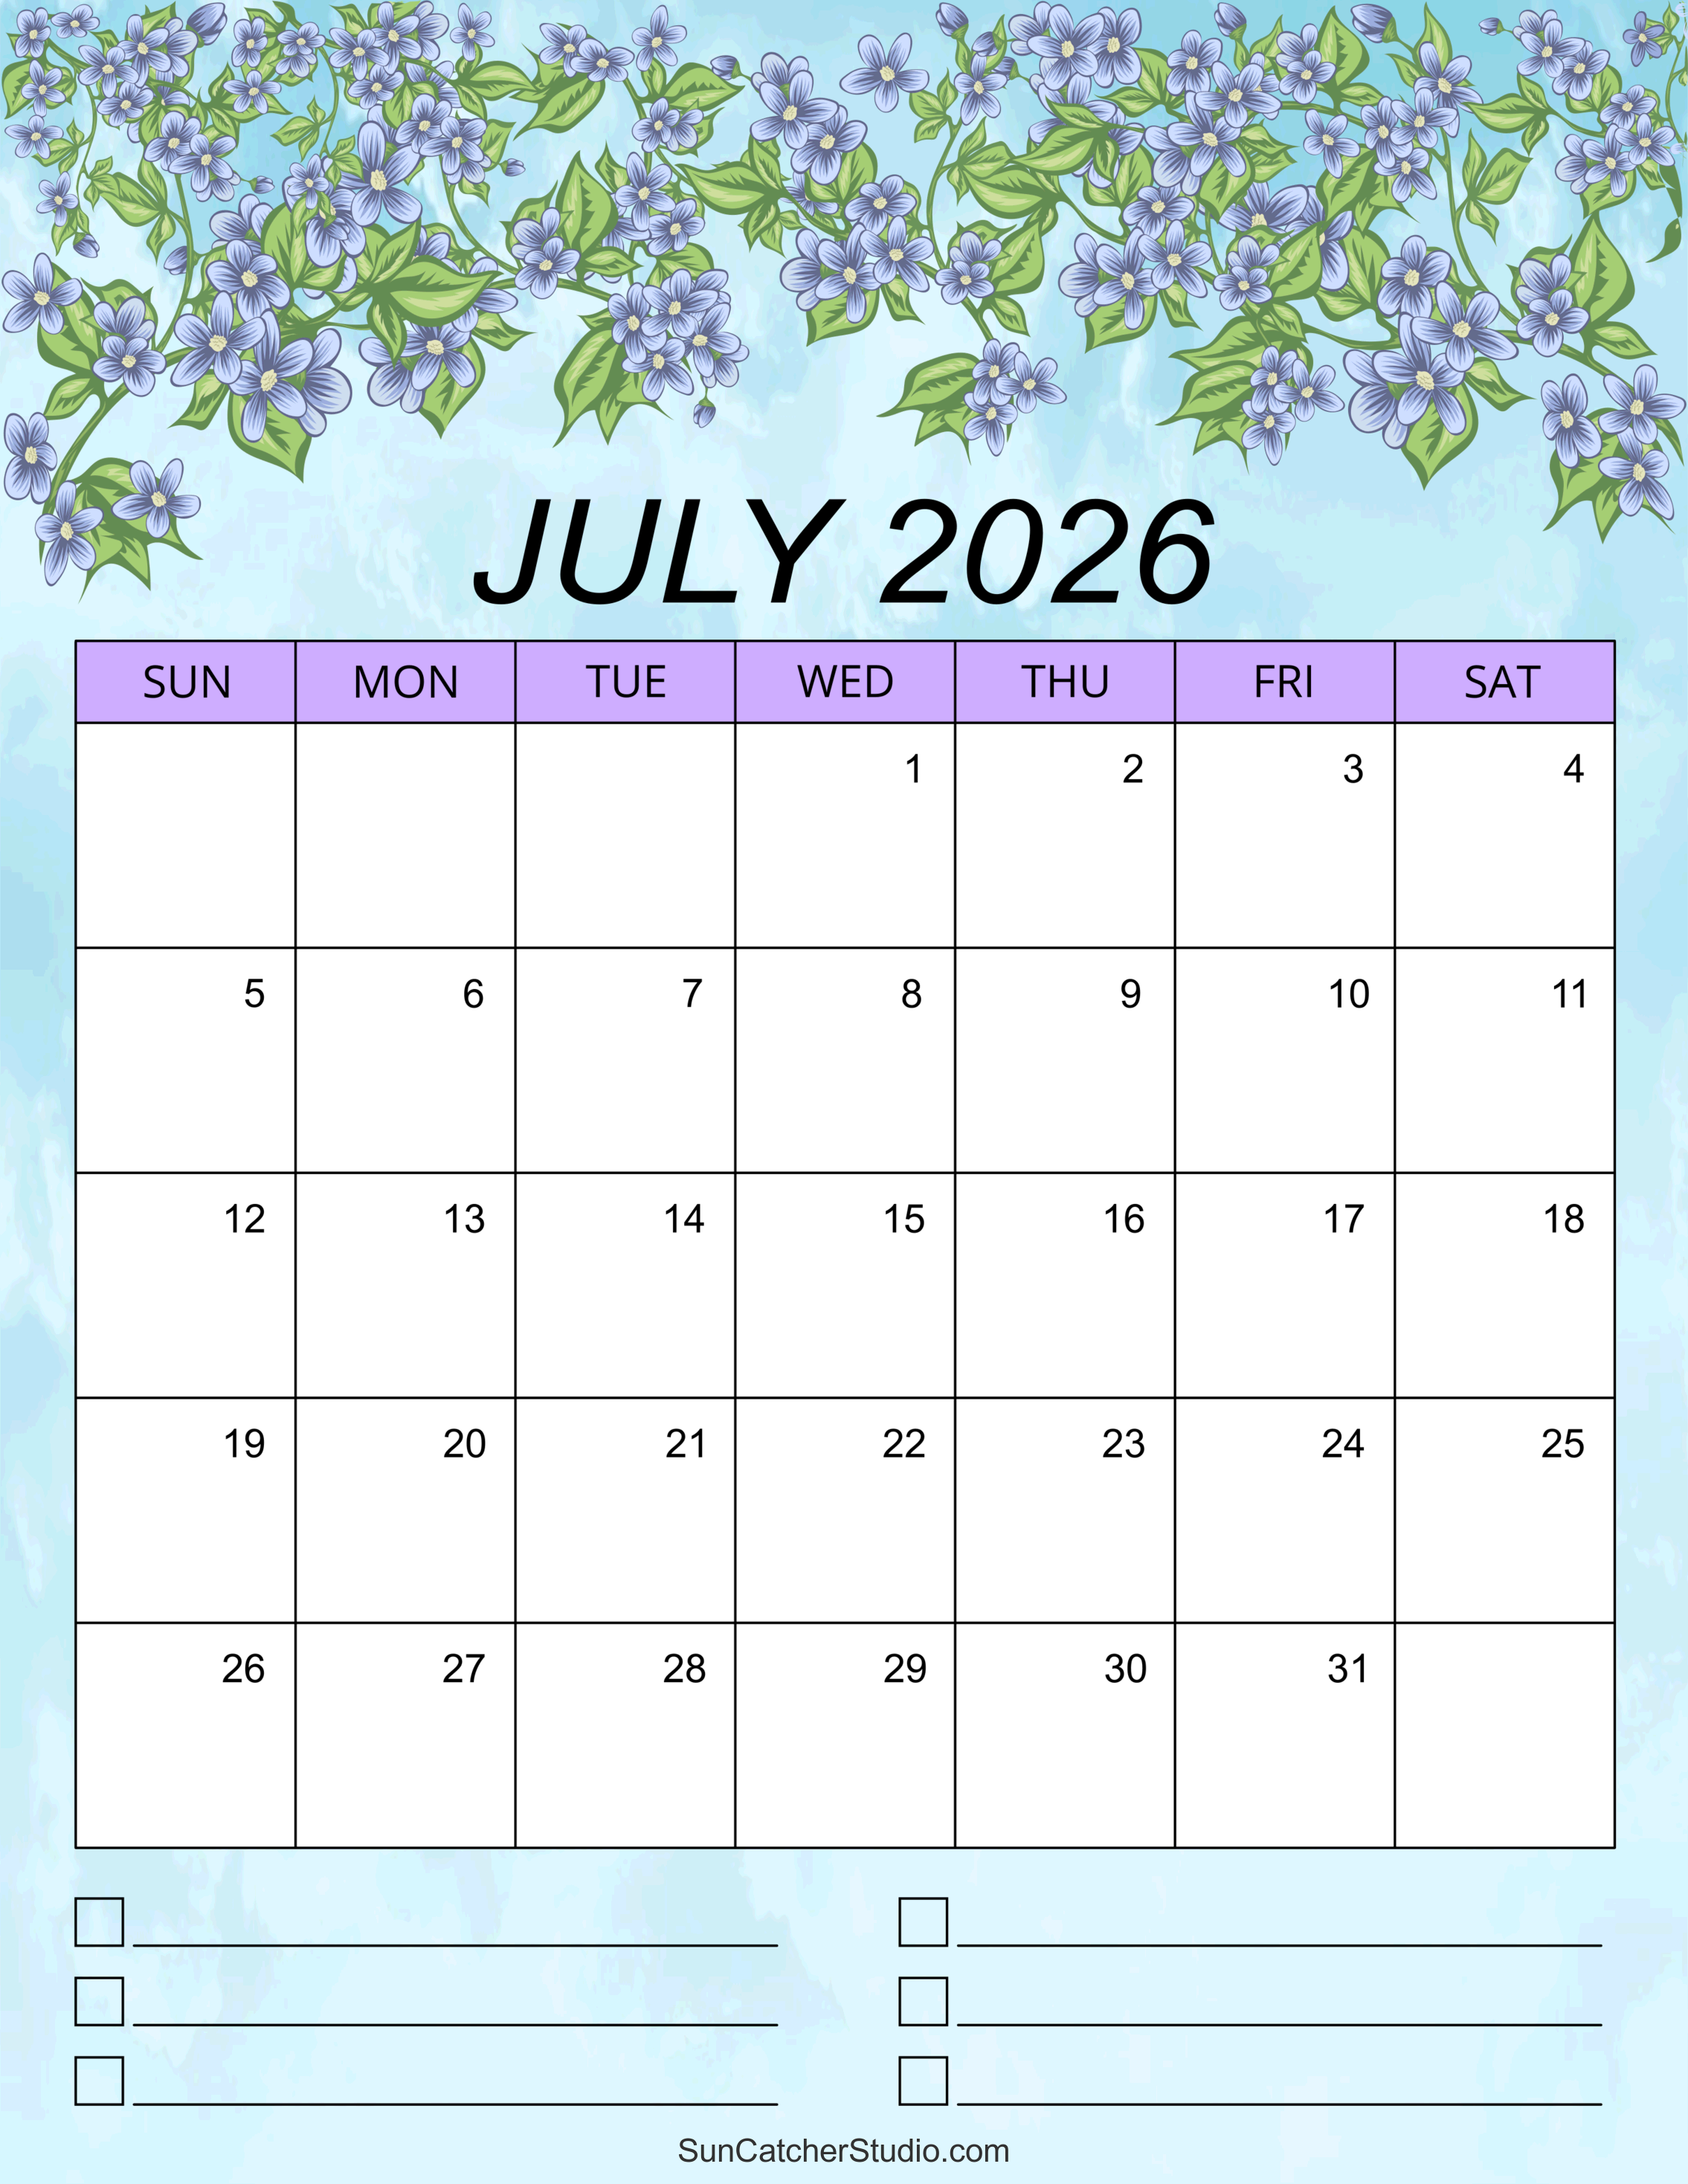 July 2026 Calendar (Free Printable) – Diy Projects, Patterns inside Calendar For July 2026